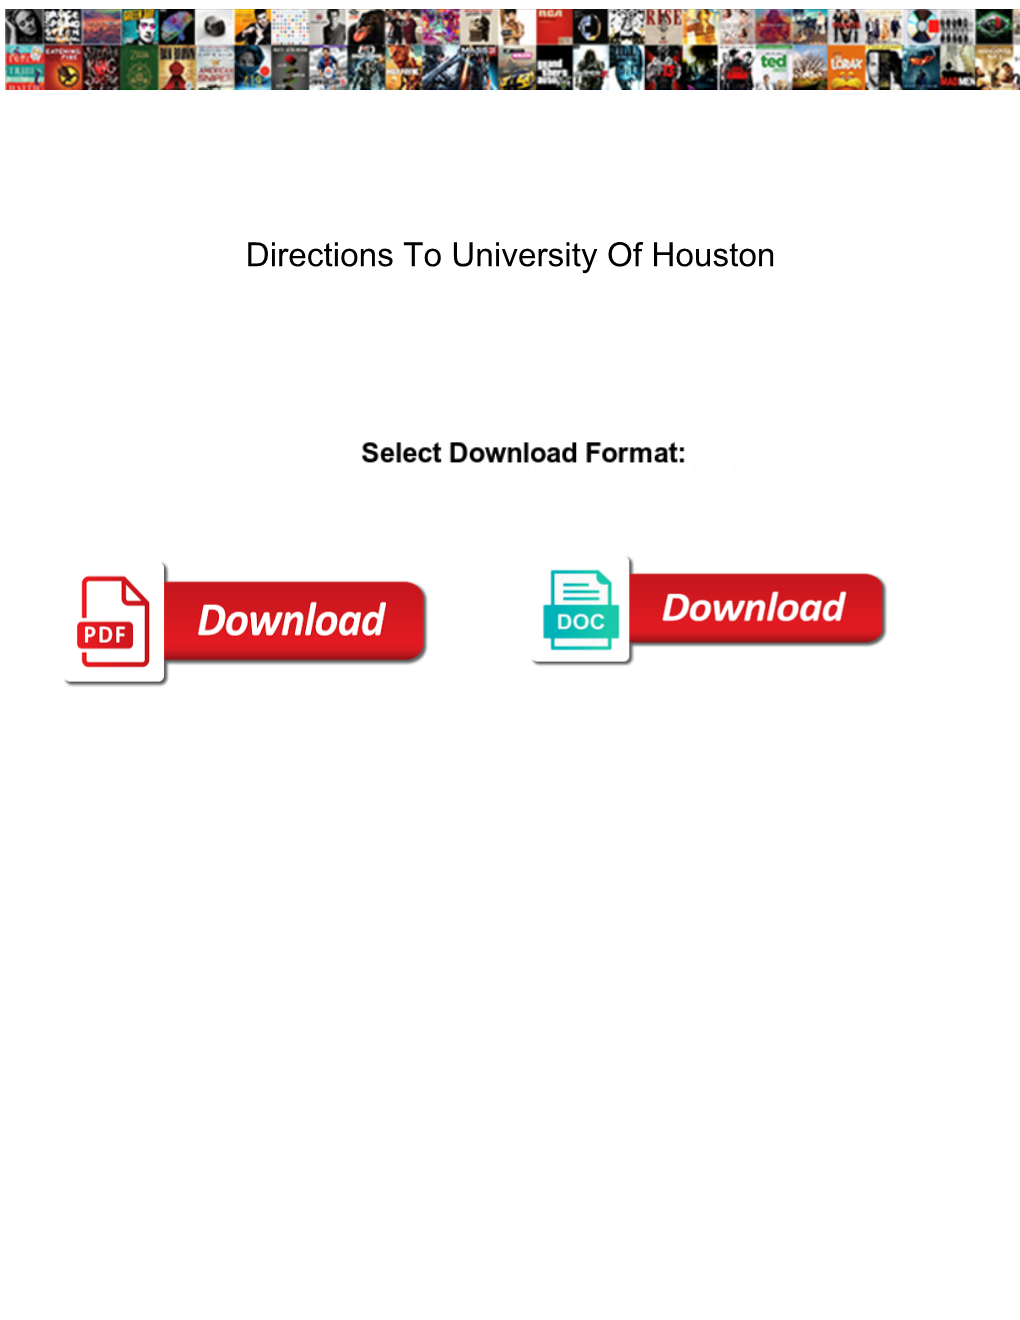 Directions to University of Houston